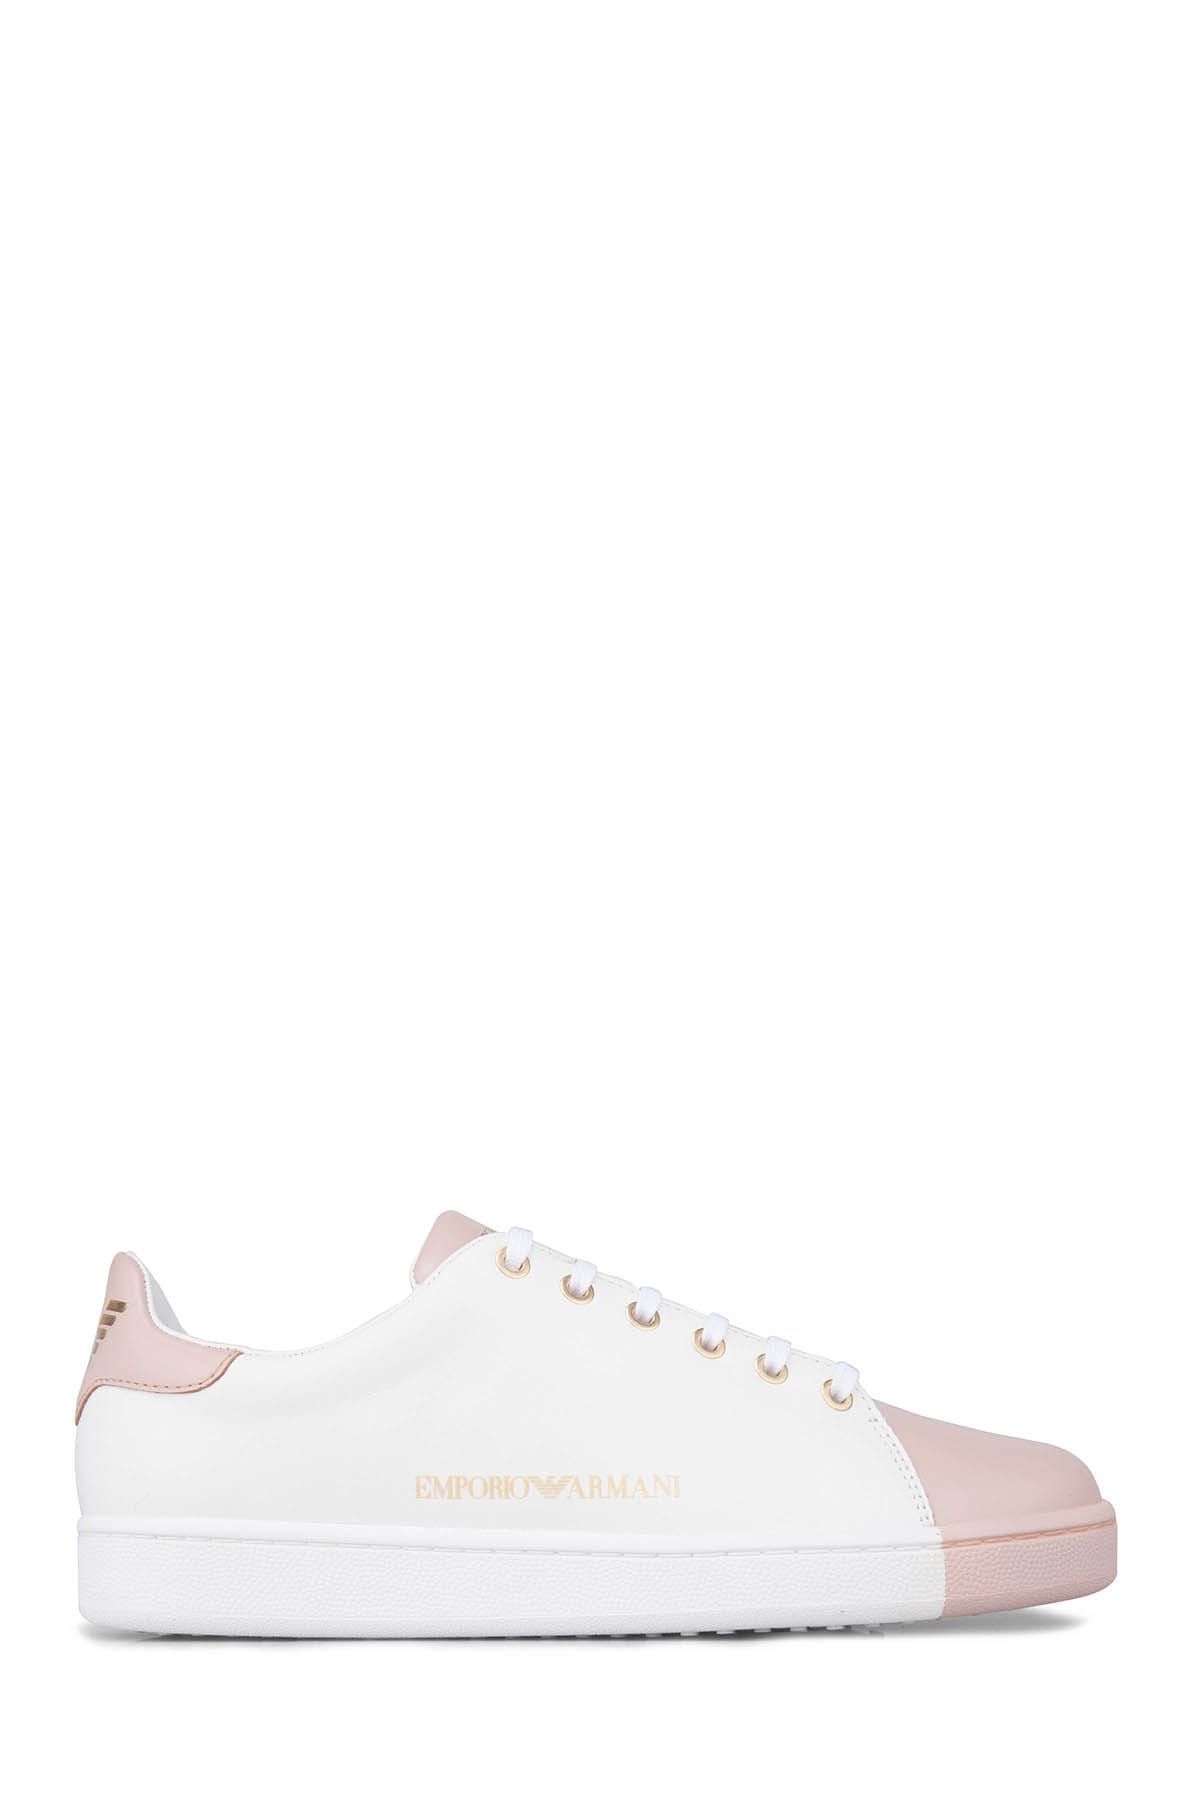 Emporio Armani Beyaz-Pudra Kadın Ayakkabı X3X061 XL815 C992